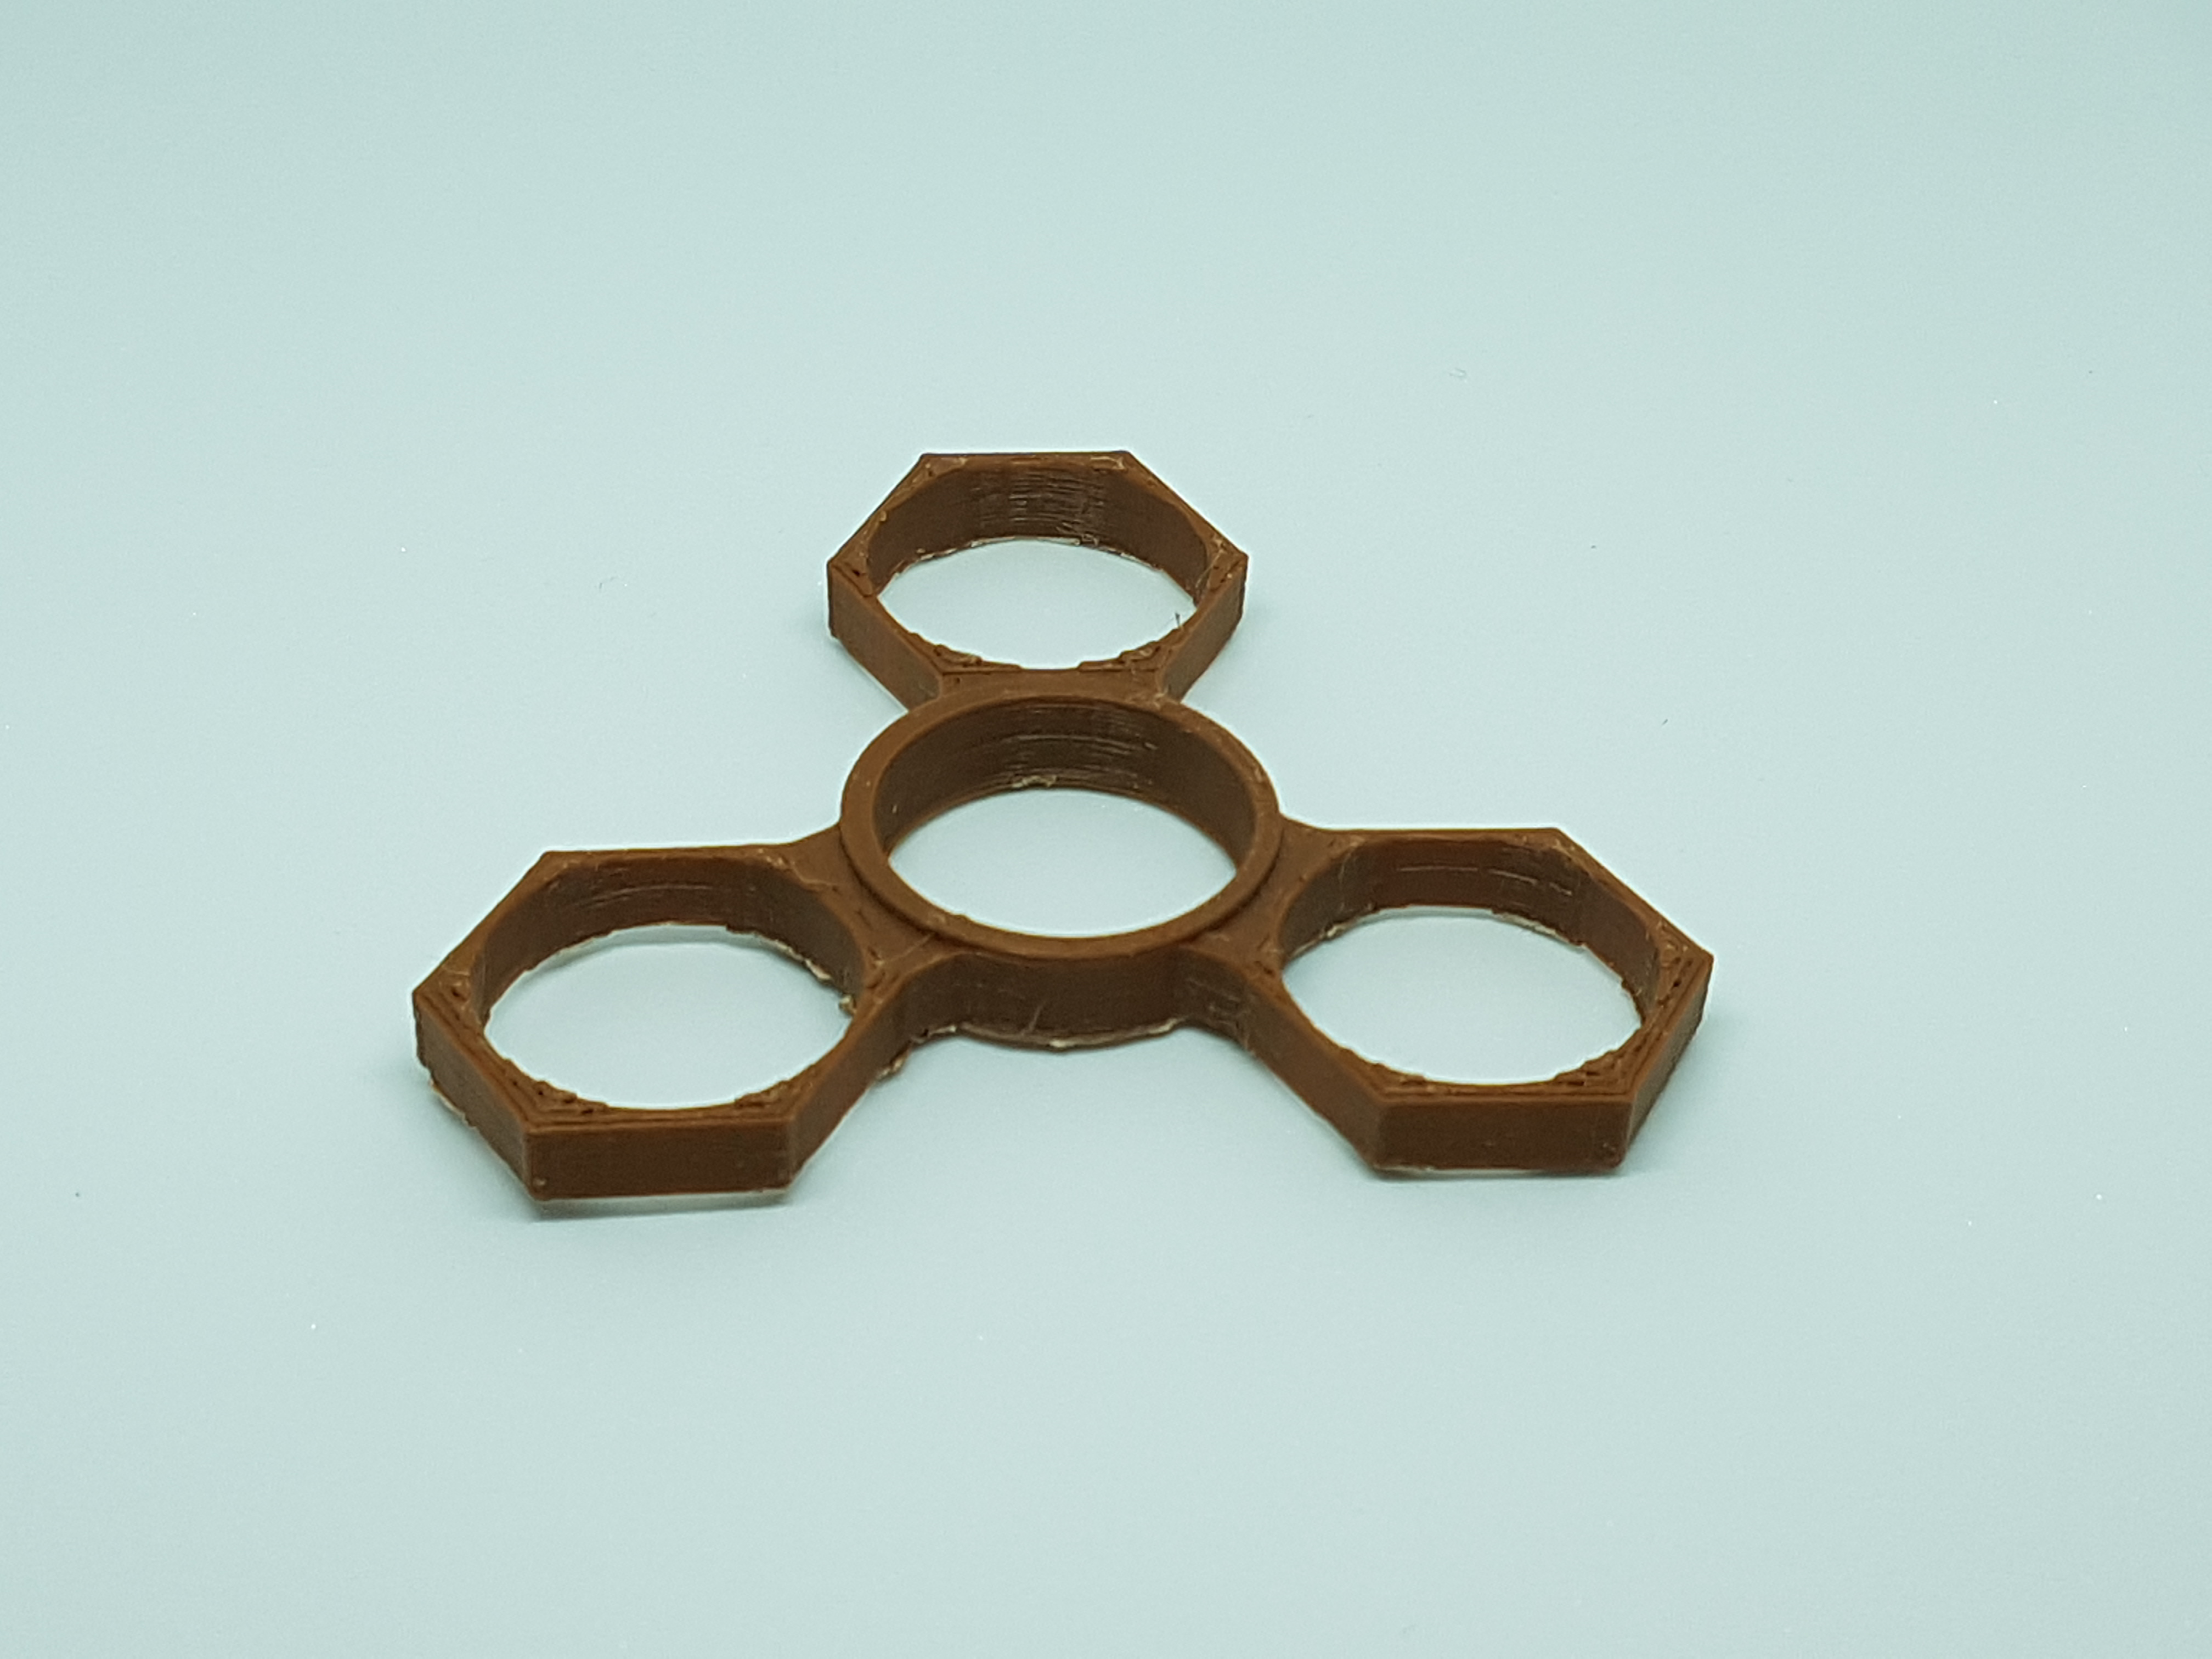 Simple Yet Cool Hexagon Fidget Spinner